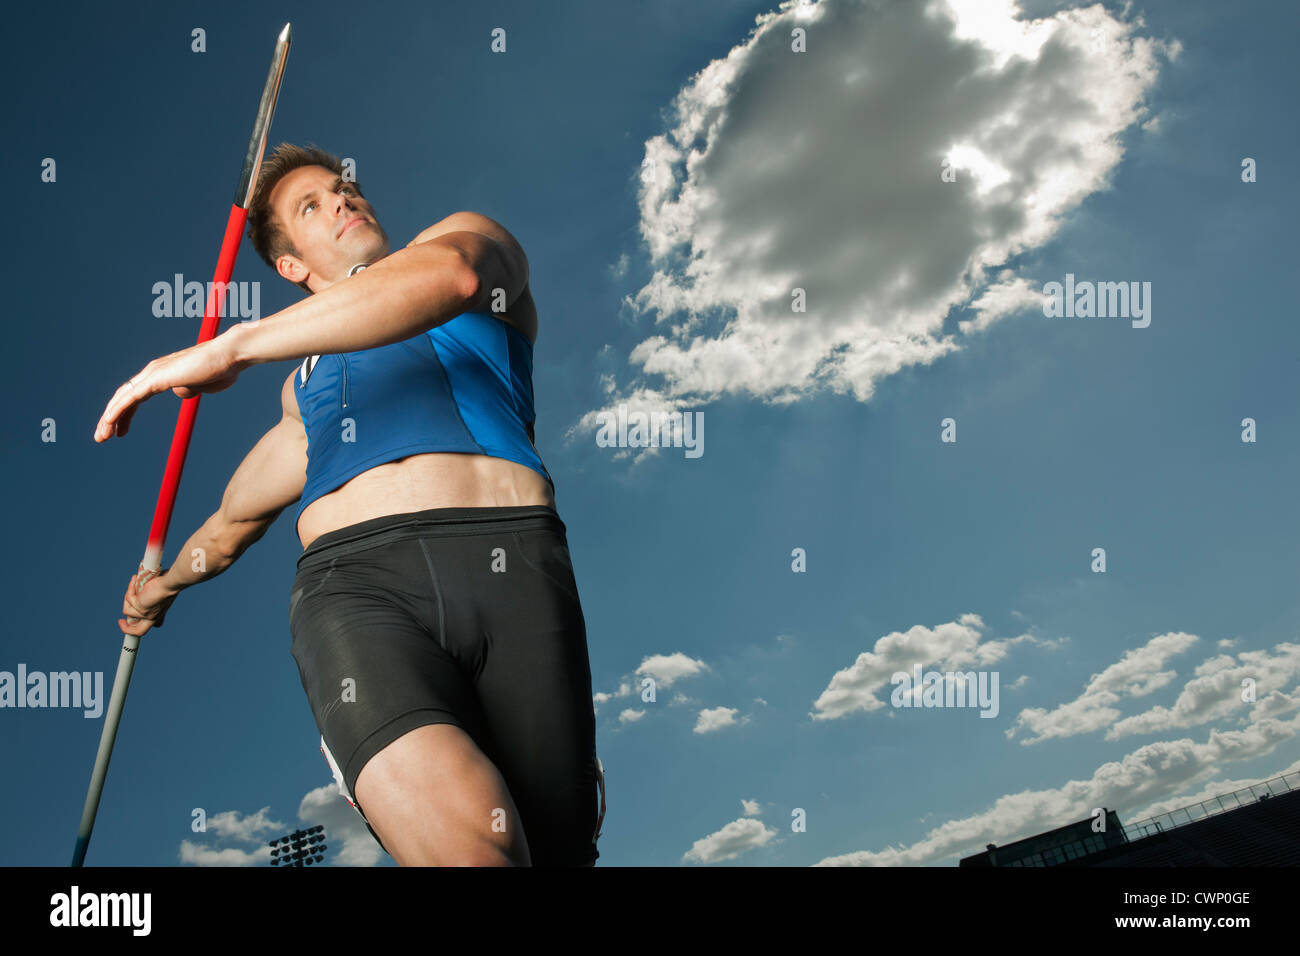 Javelin thrower aiming, low angle view Stock Photo